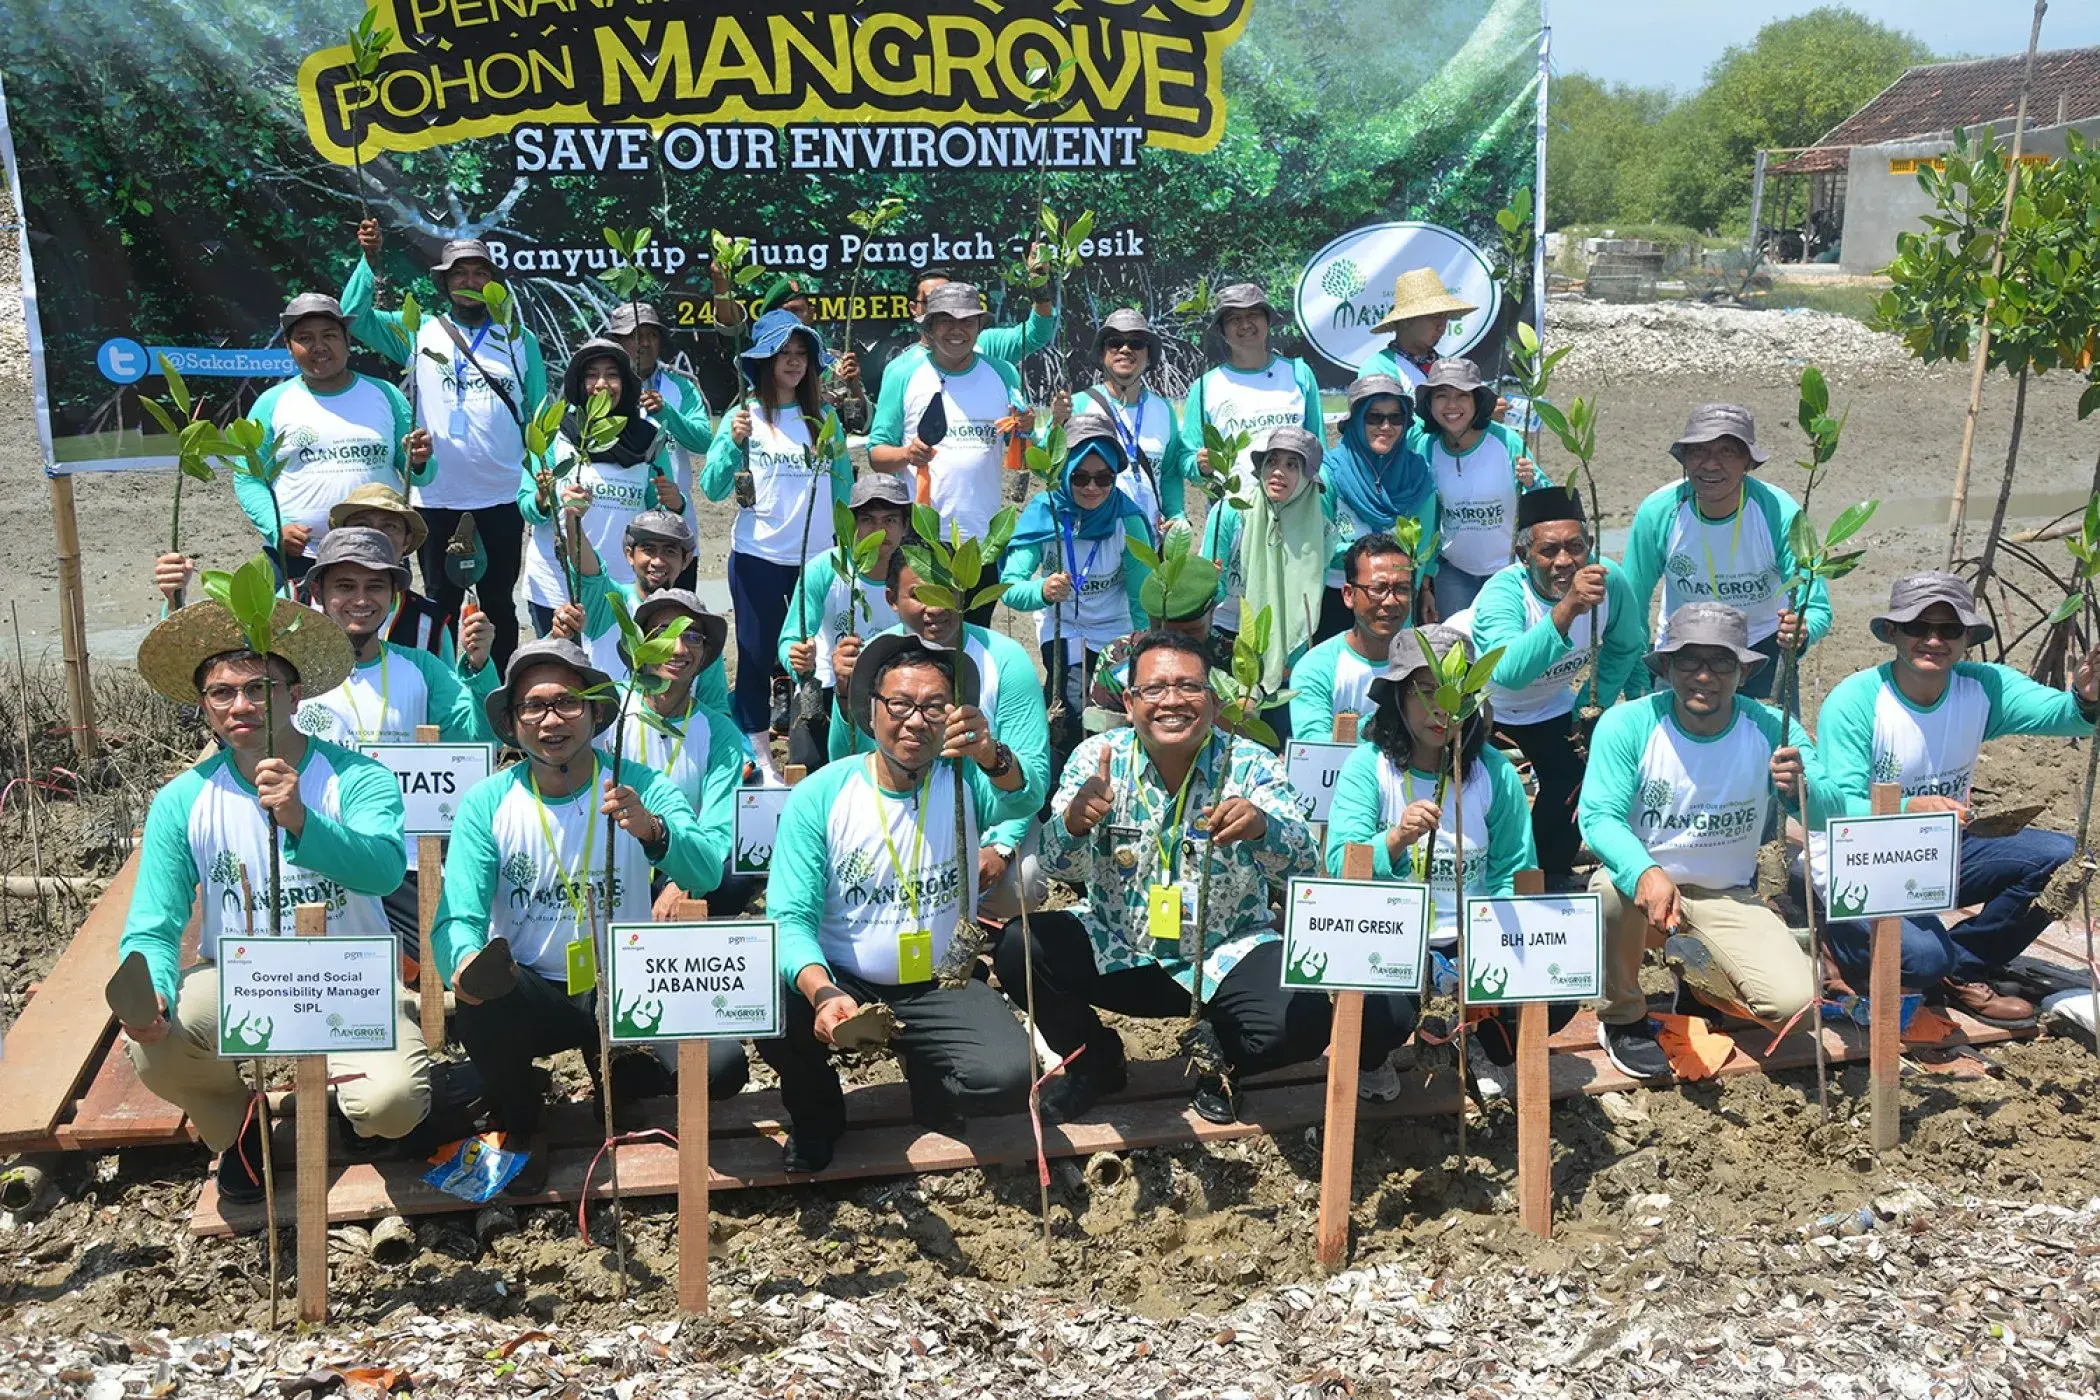 Saka Again Proves Its Commitment through Mangrove Planting